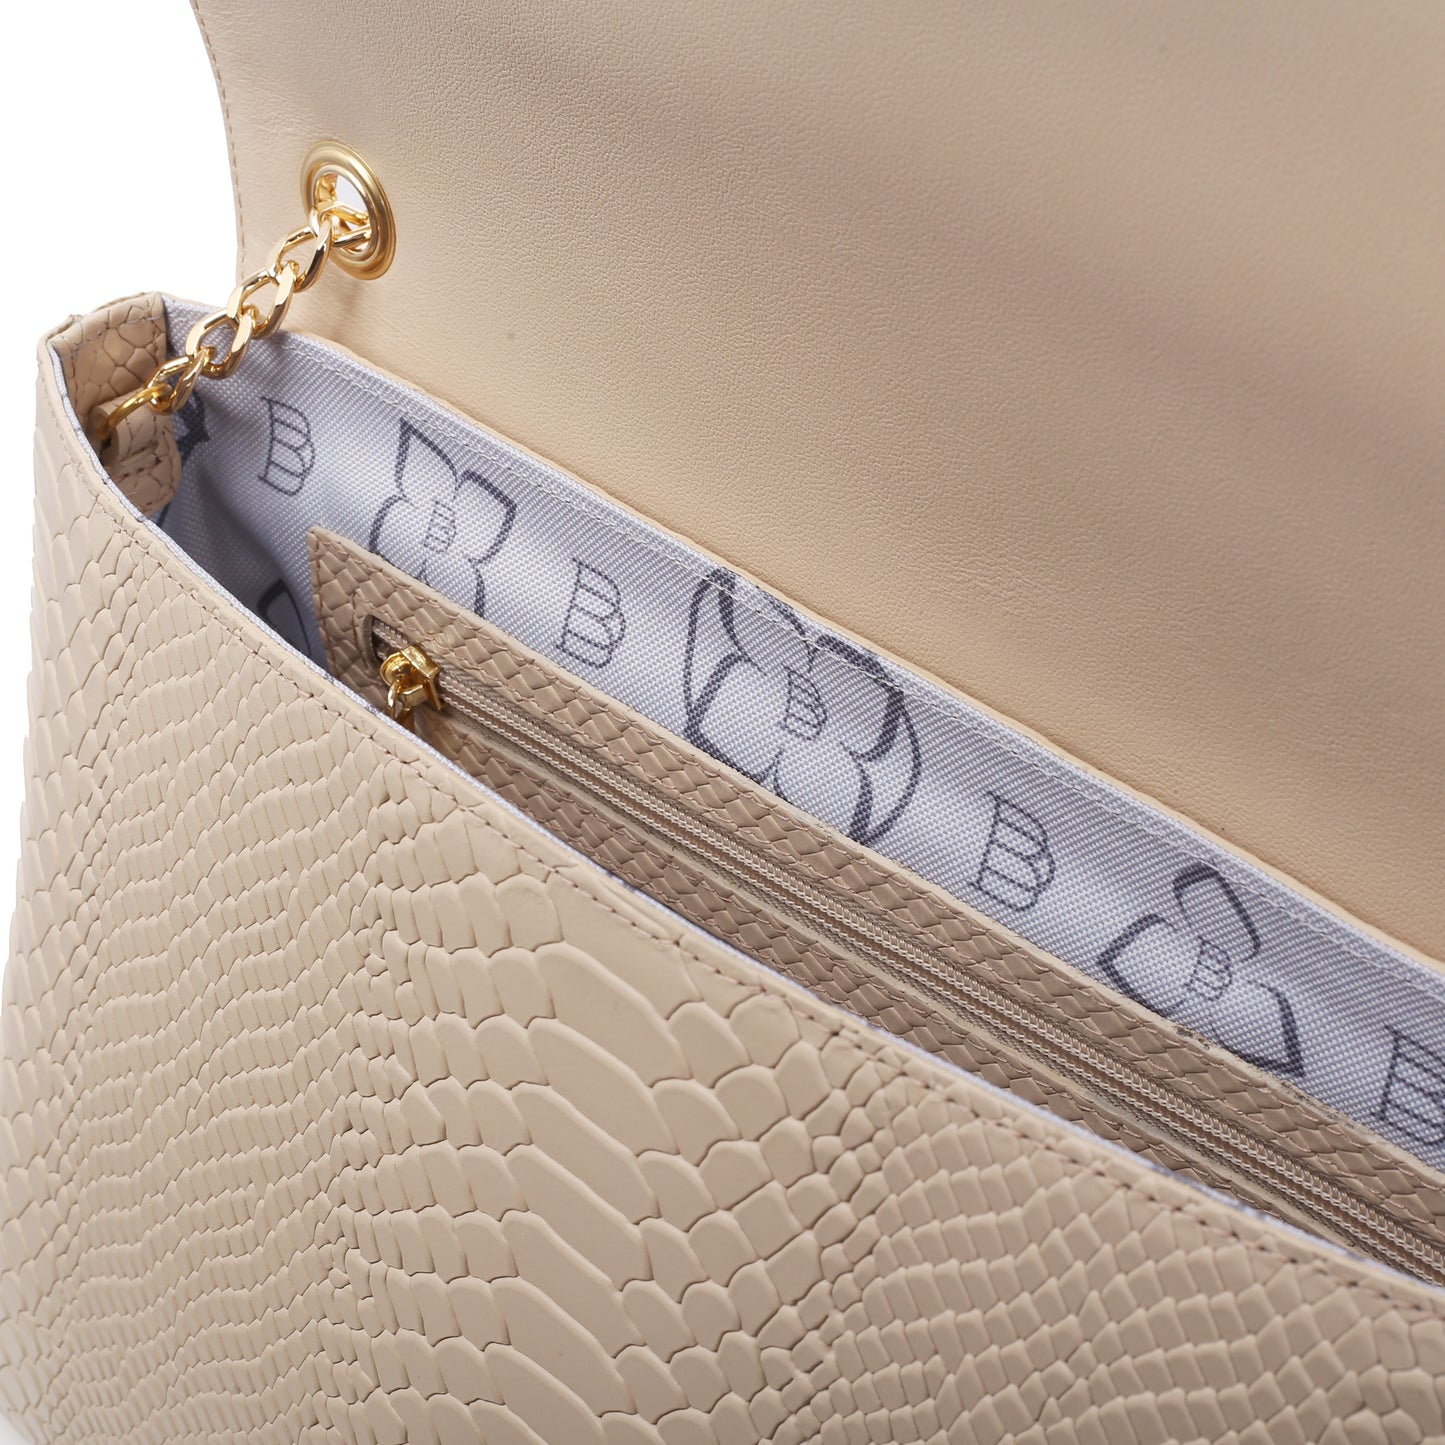 SAINT-TROPEZ ECRU leather women's handbag